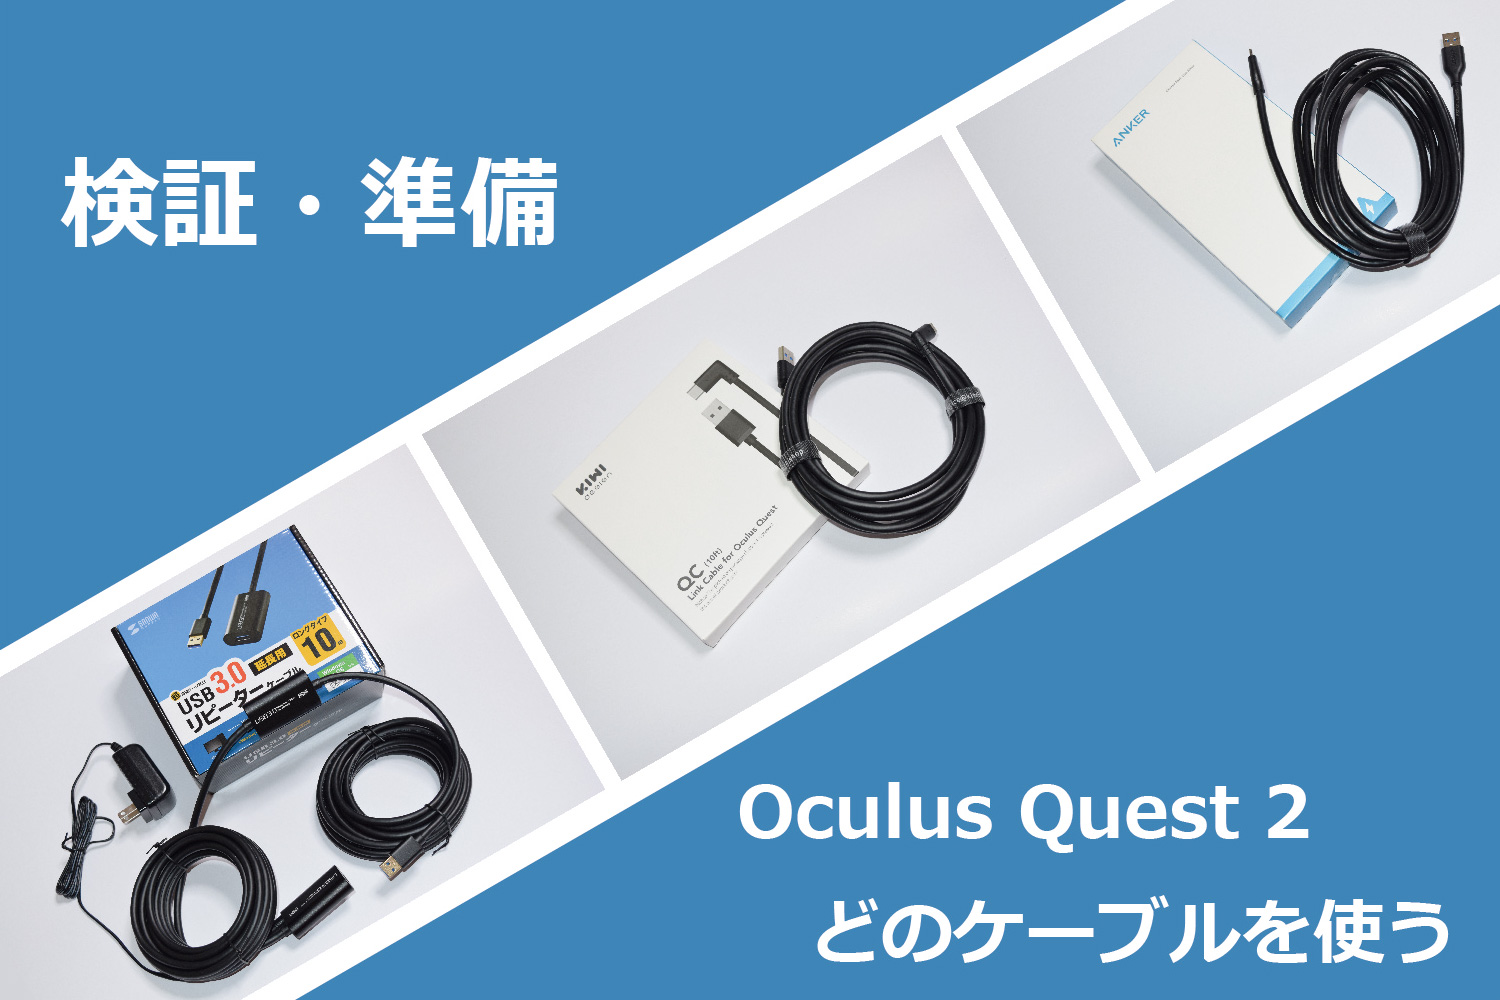 10mの延長を目論み、ケーブルはどれを使おうか。Oculus Quest 2を